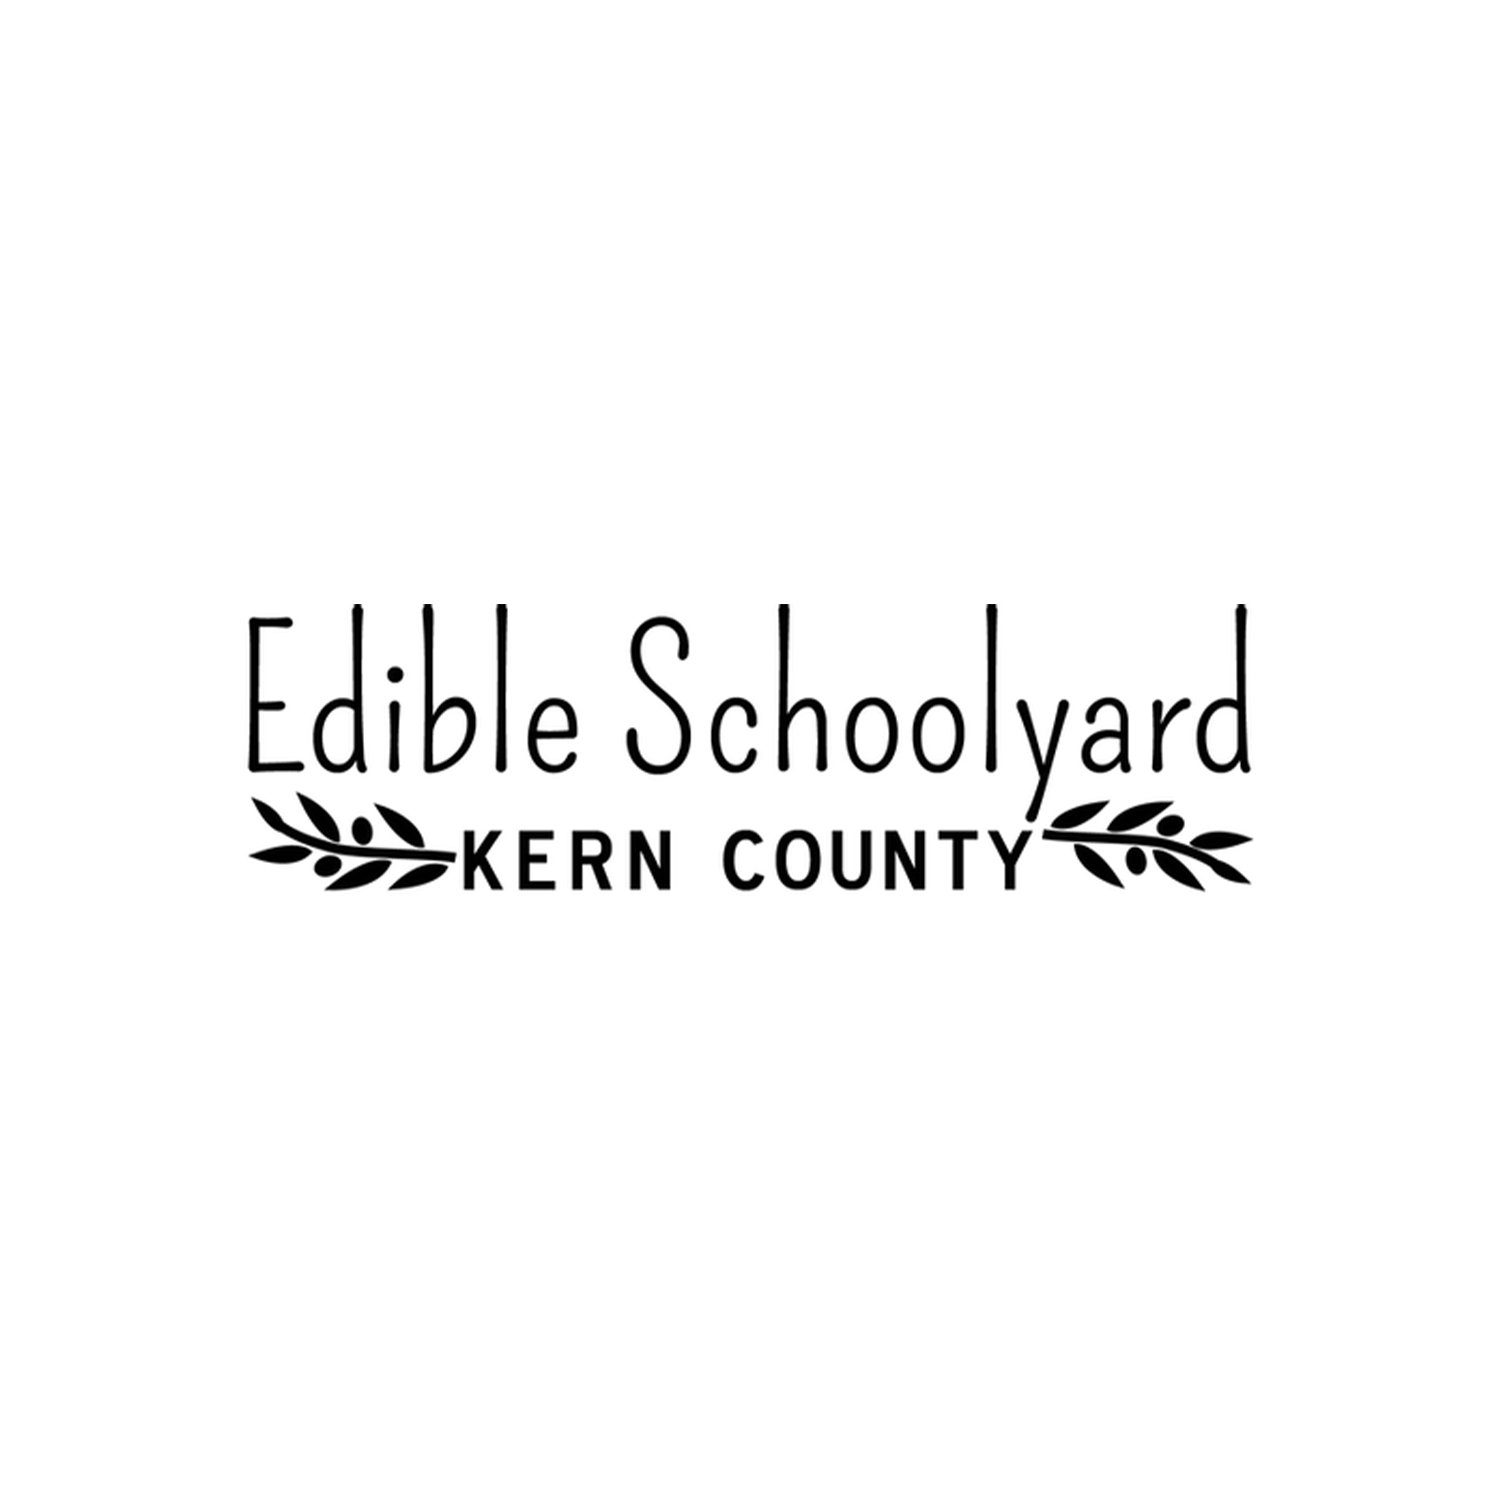 edibel schoolyard logo - black copy.jpg